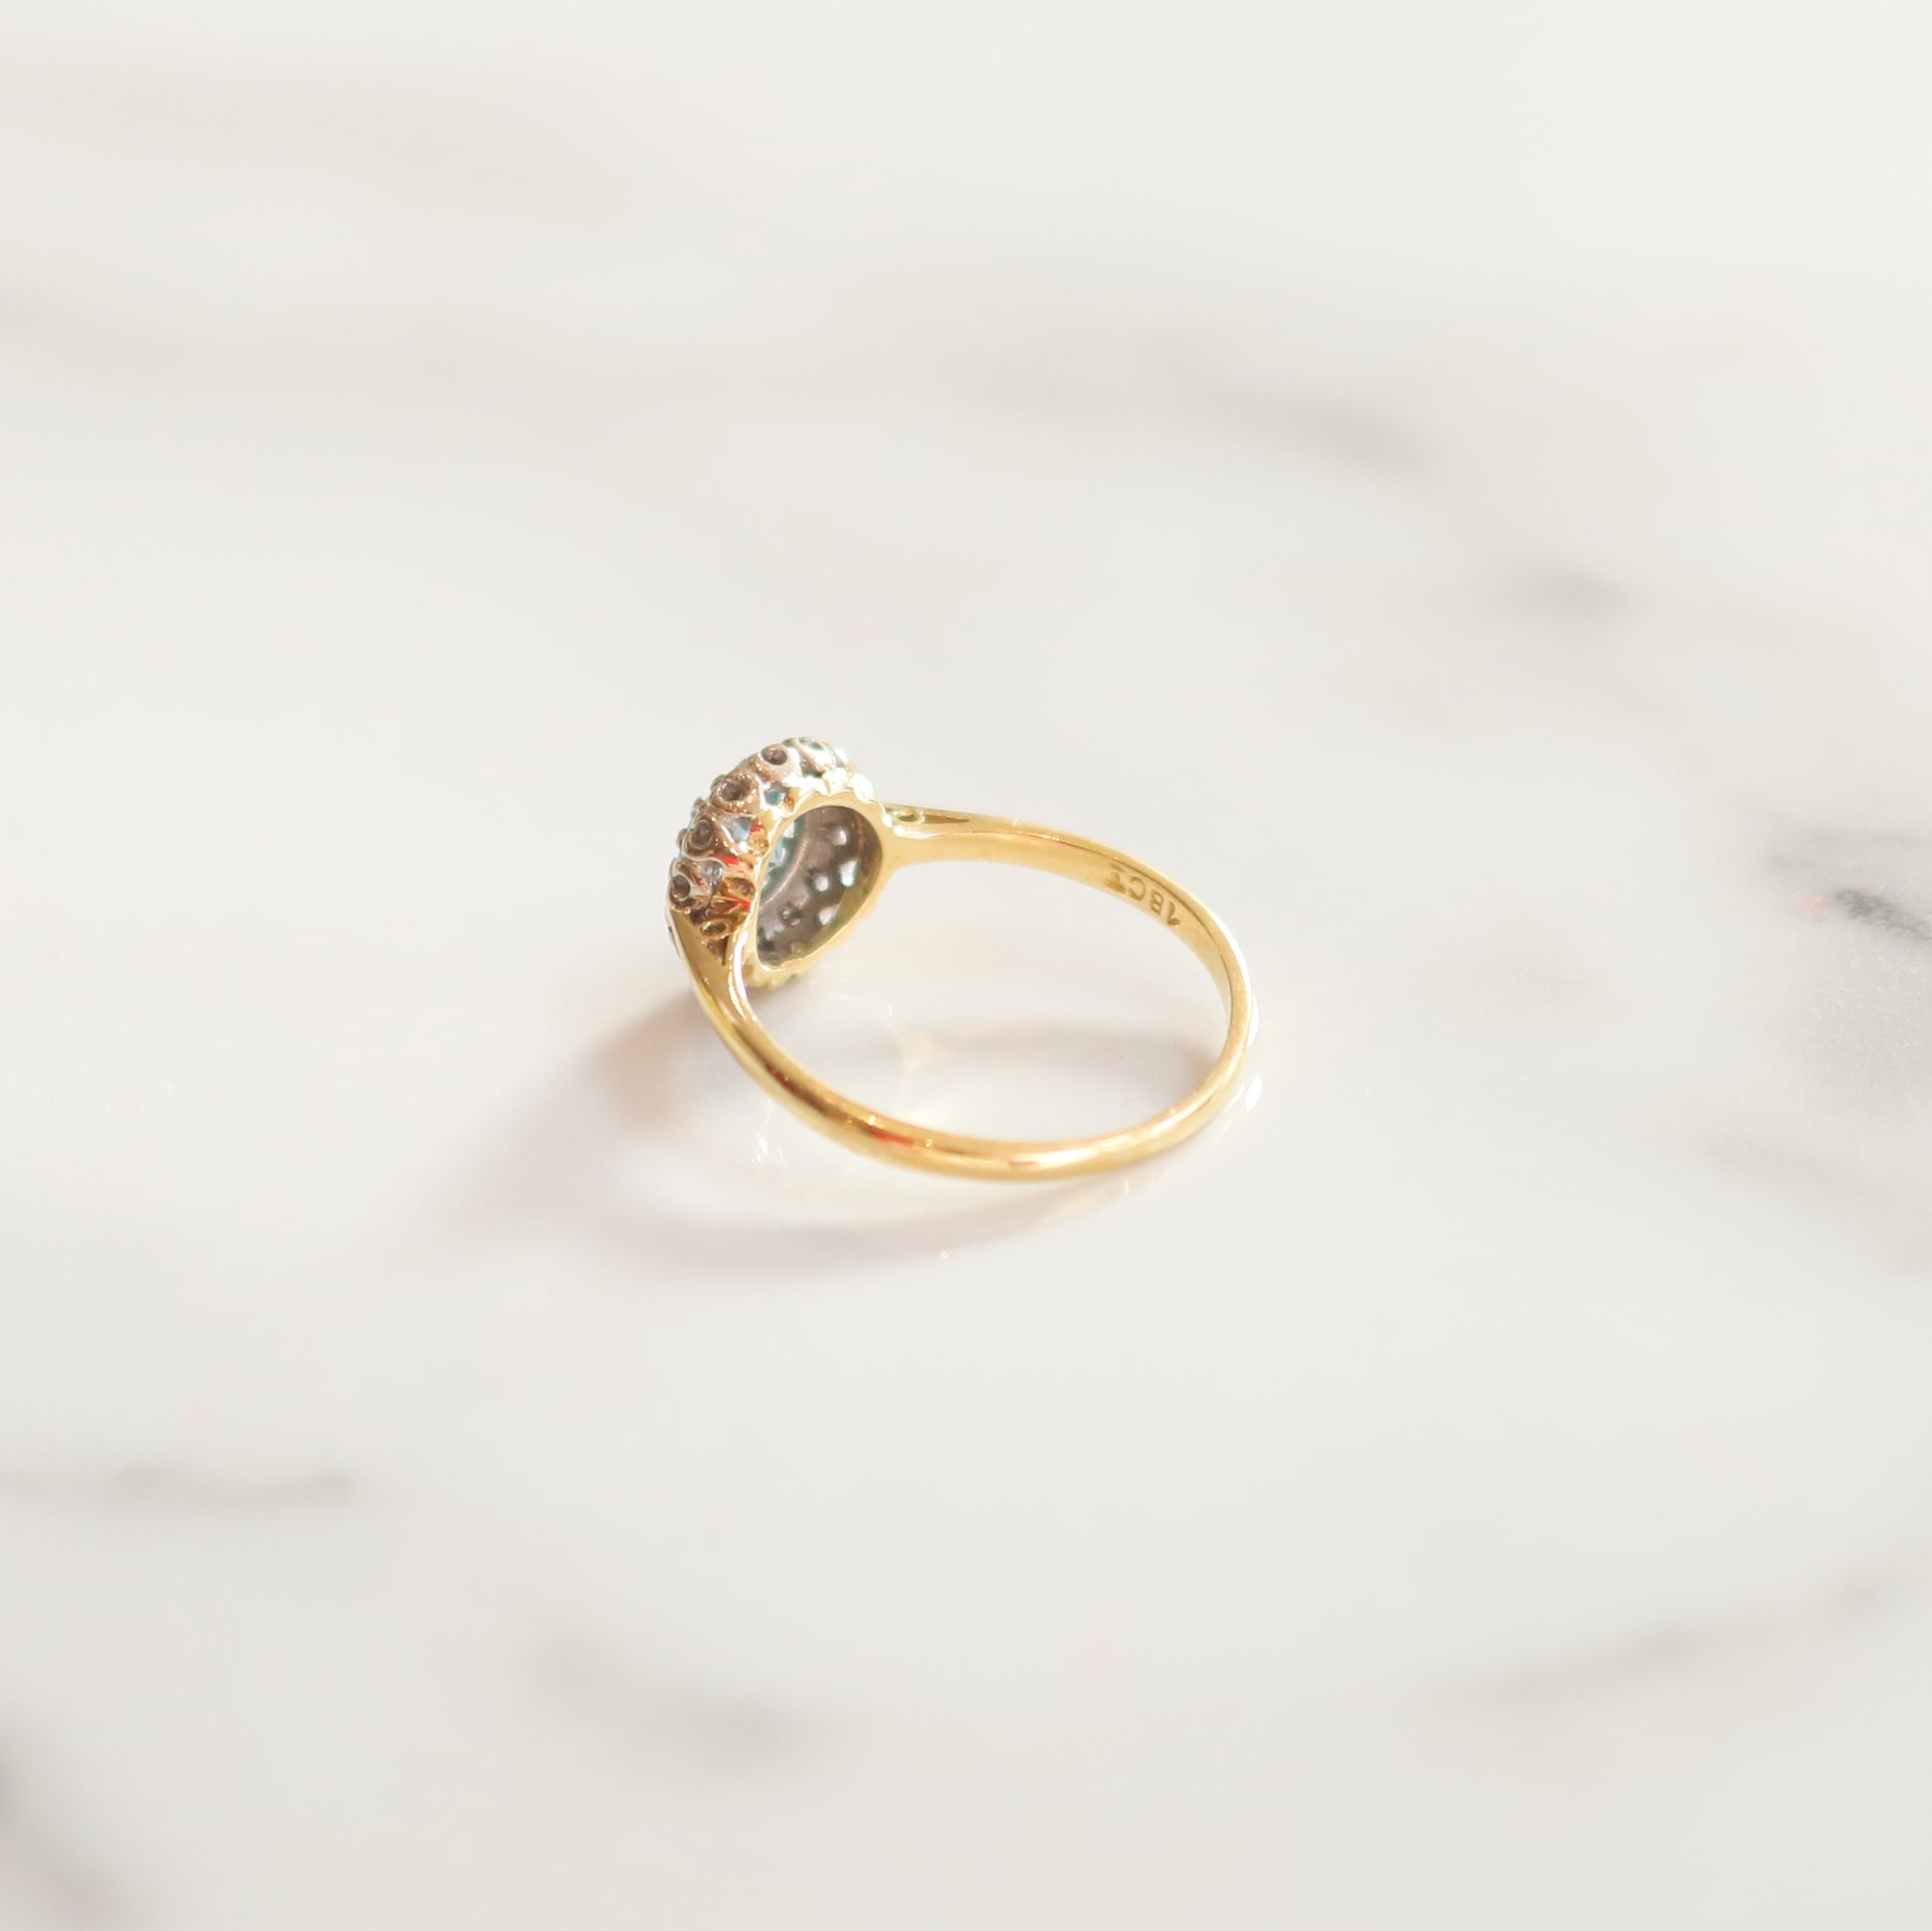 Vintage Doris Diamond & Topaz Halo Ring | UK Size O | 18ct Solid Gold